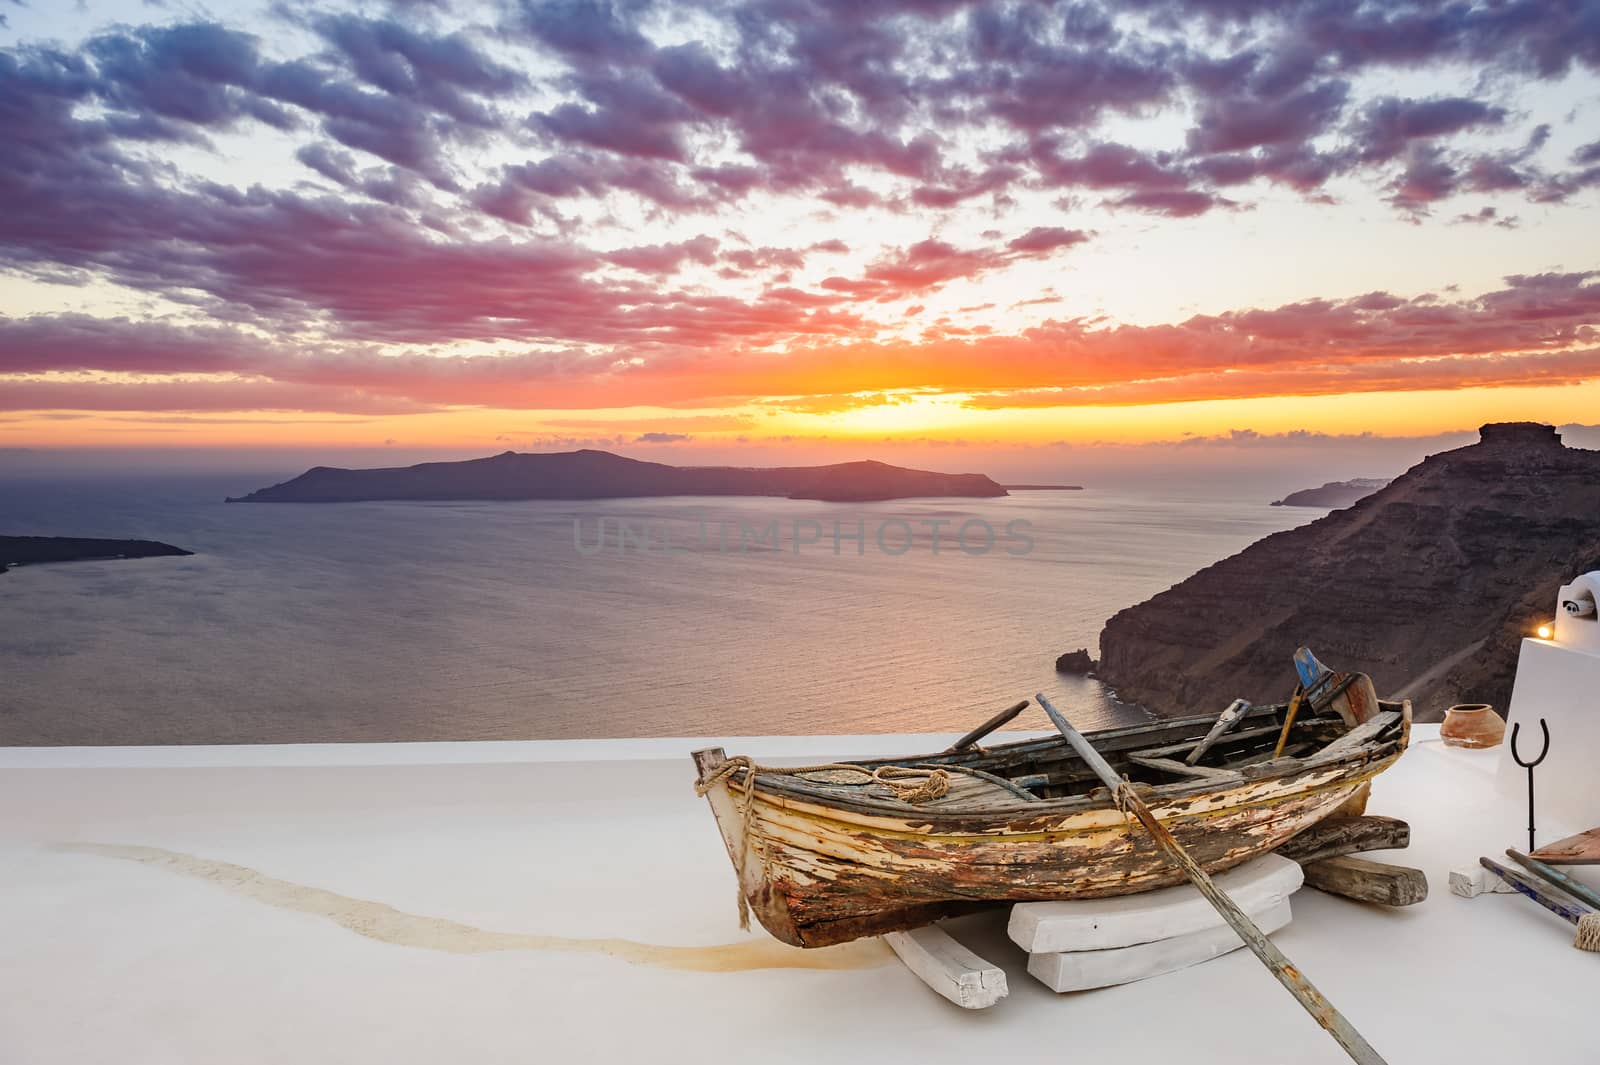 Old wooden boat on roof in Firostefani, Santorini island, Greece by starush